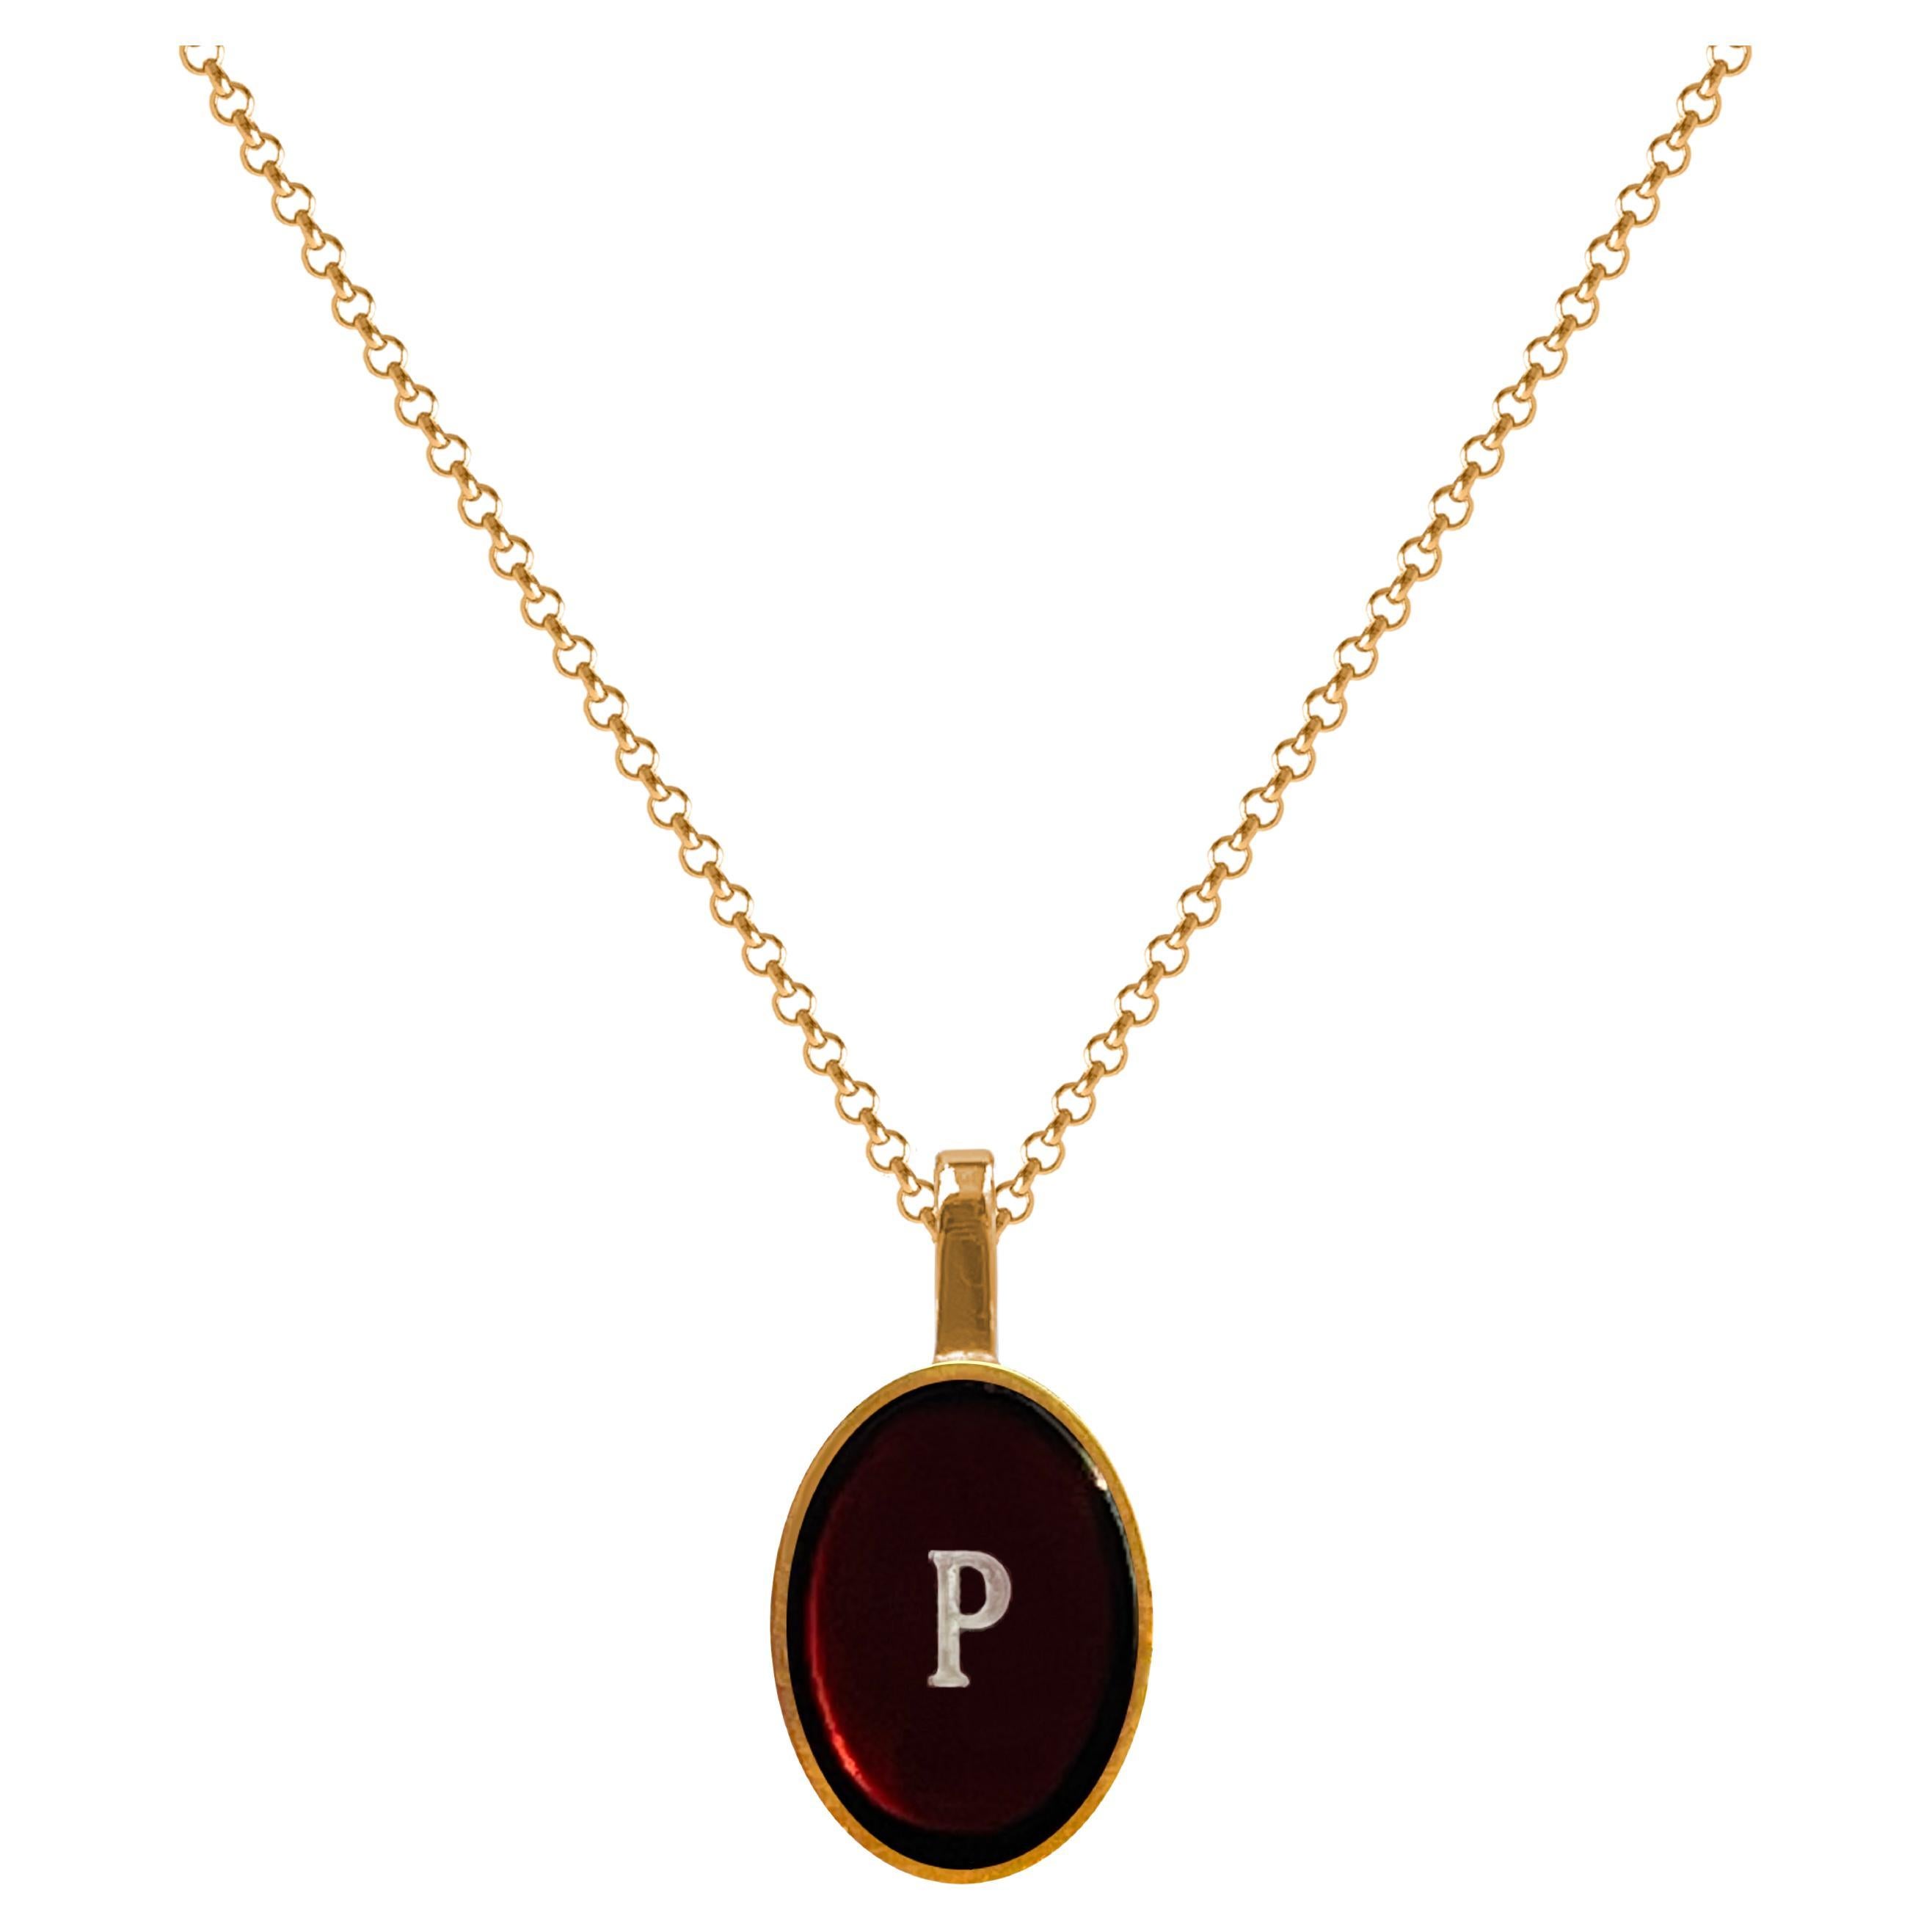 Collier avec pendentif en ambre et or en forme de lettre de nom - P en vente